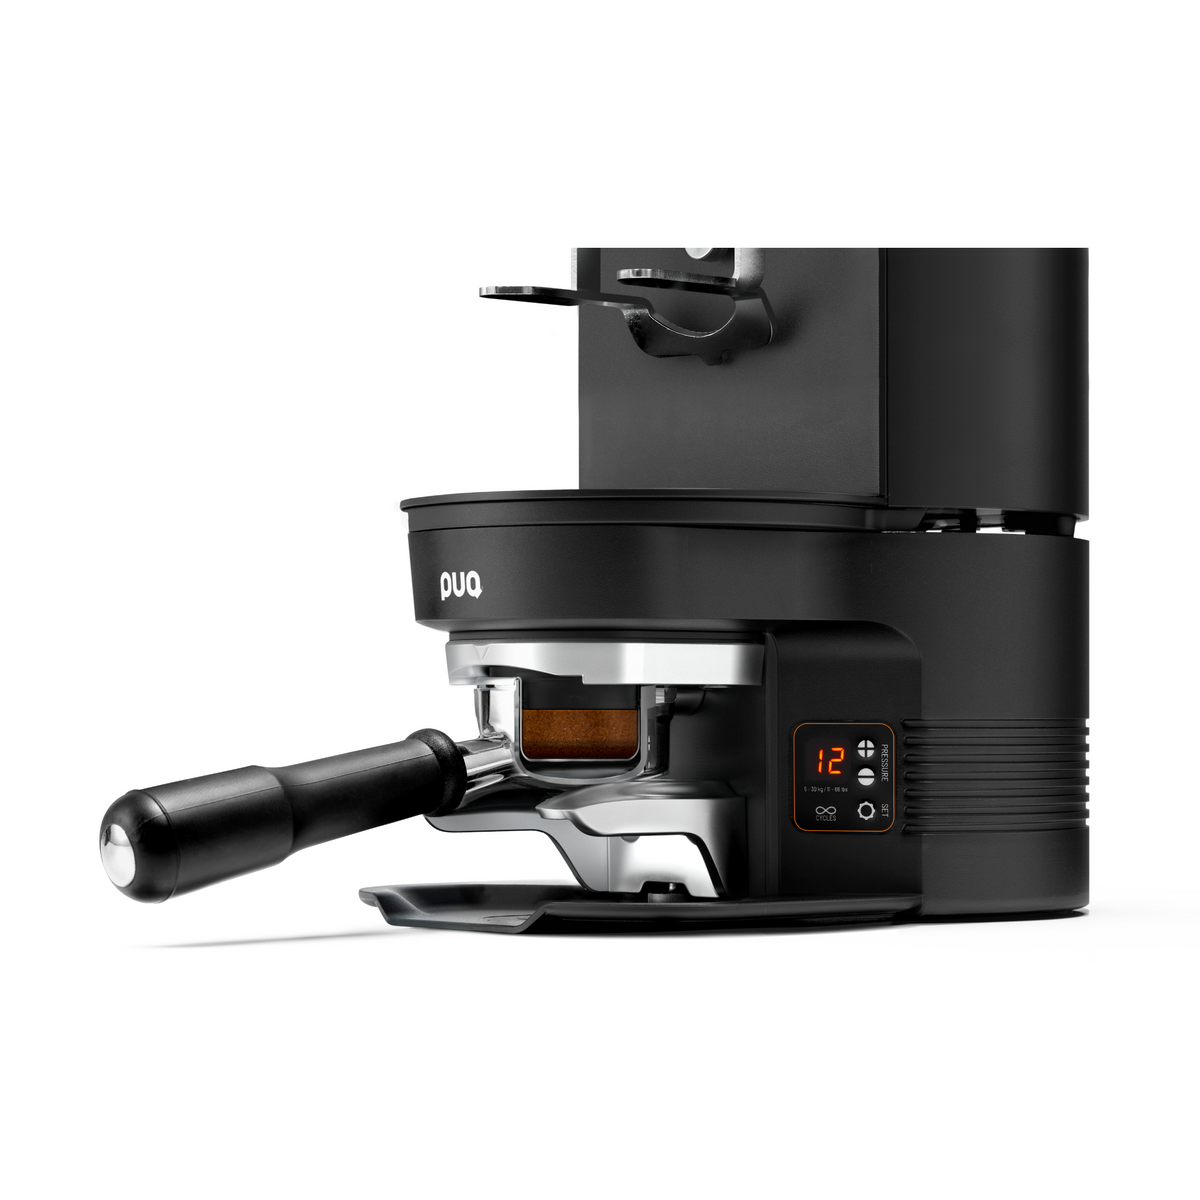 Puqpress Gen 5 M3 - 適用於 Mahlkonig E65S 和 E65S GBW 研磨機的自動咖啡搗壓器